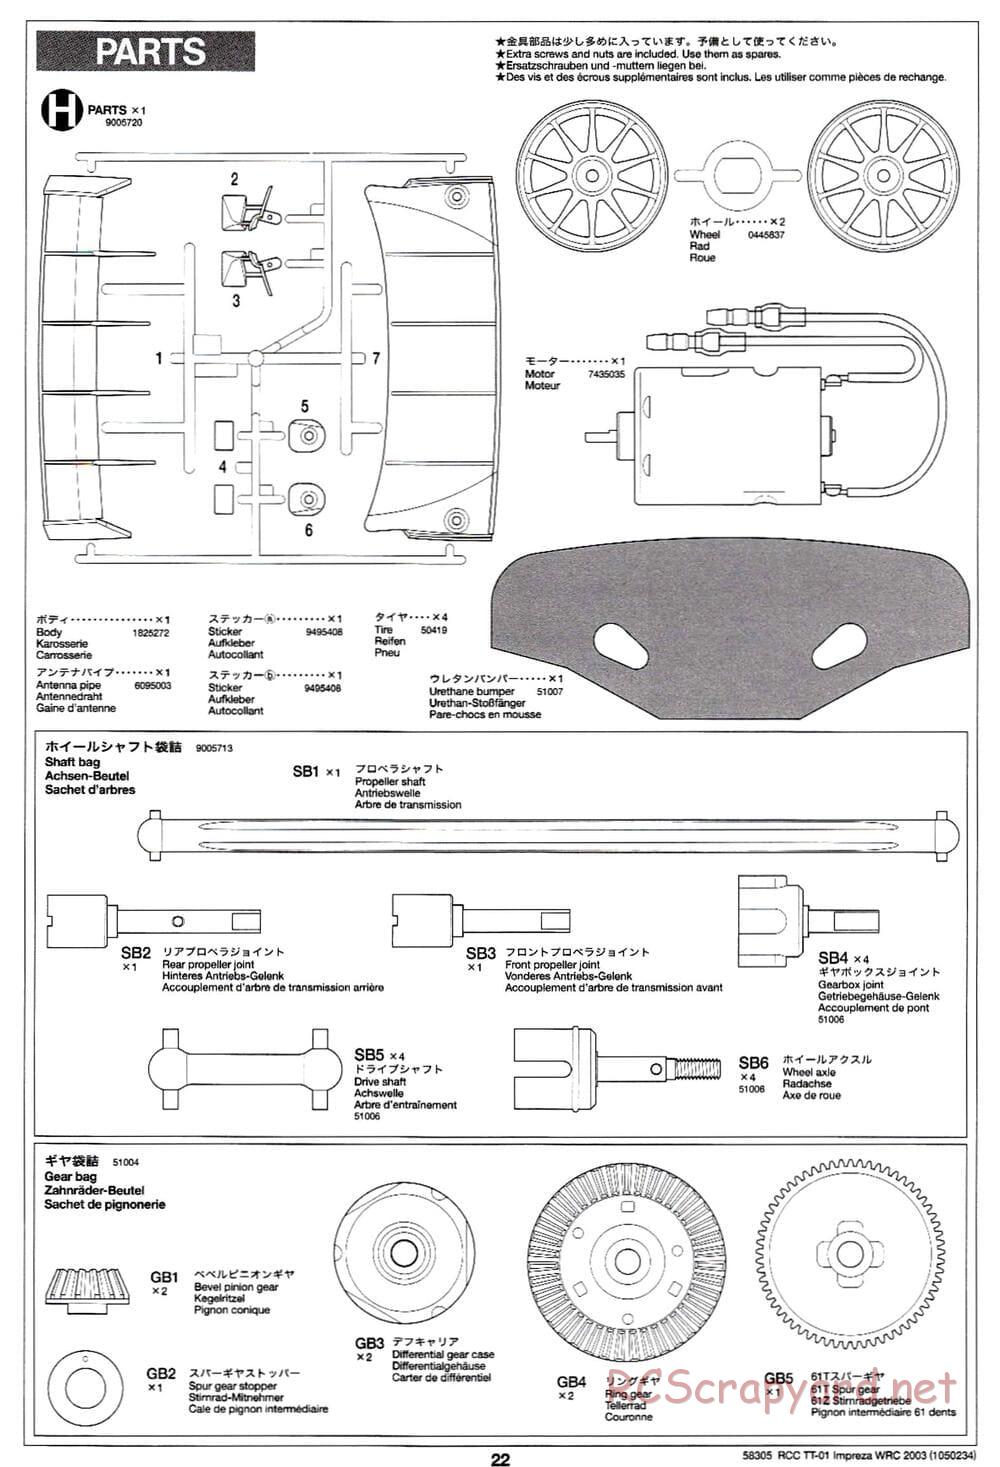 Tamiya - Subaru Impreza WRC 2003 - TT-01 Chassis - Manual - Page 22